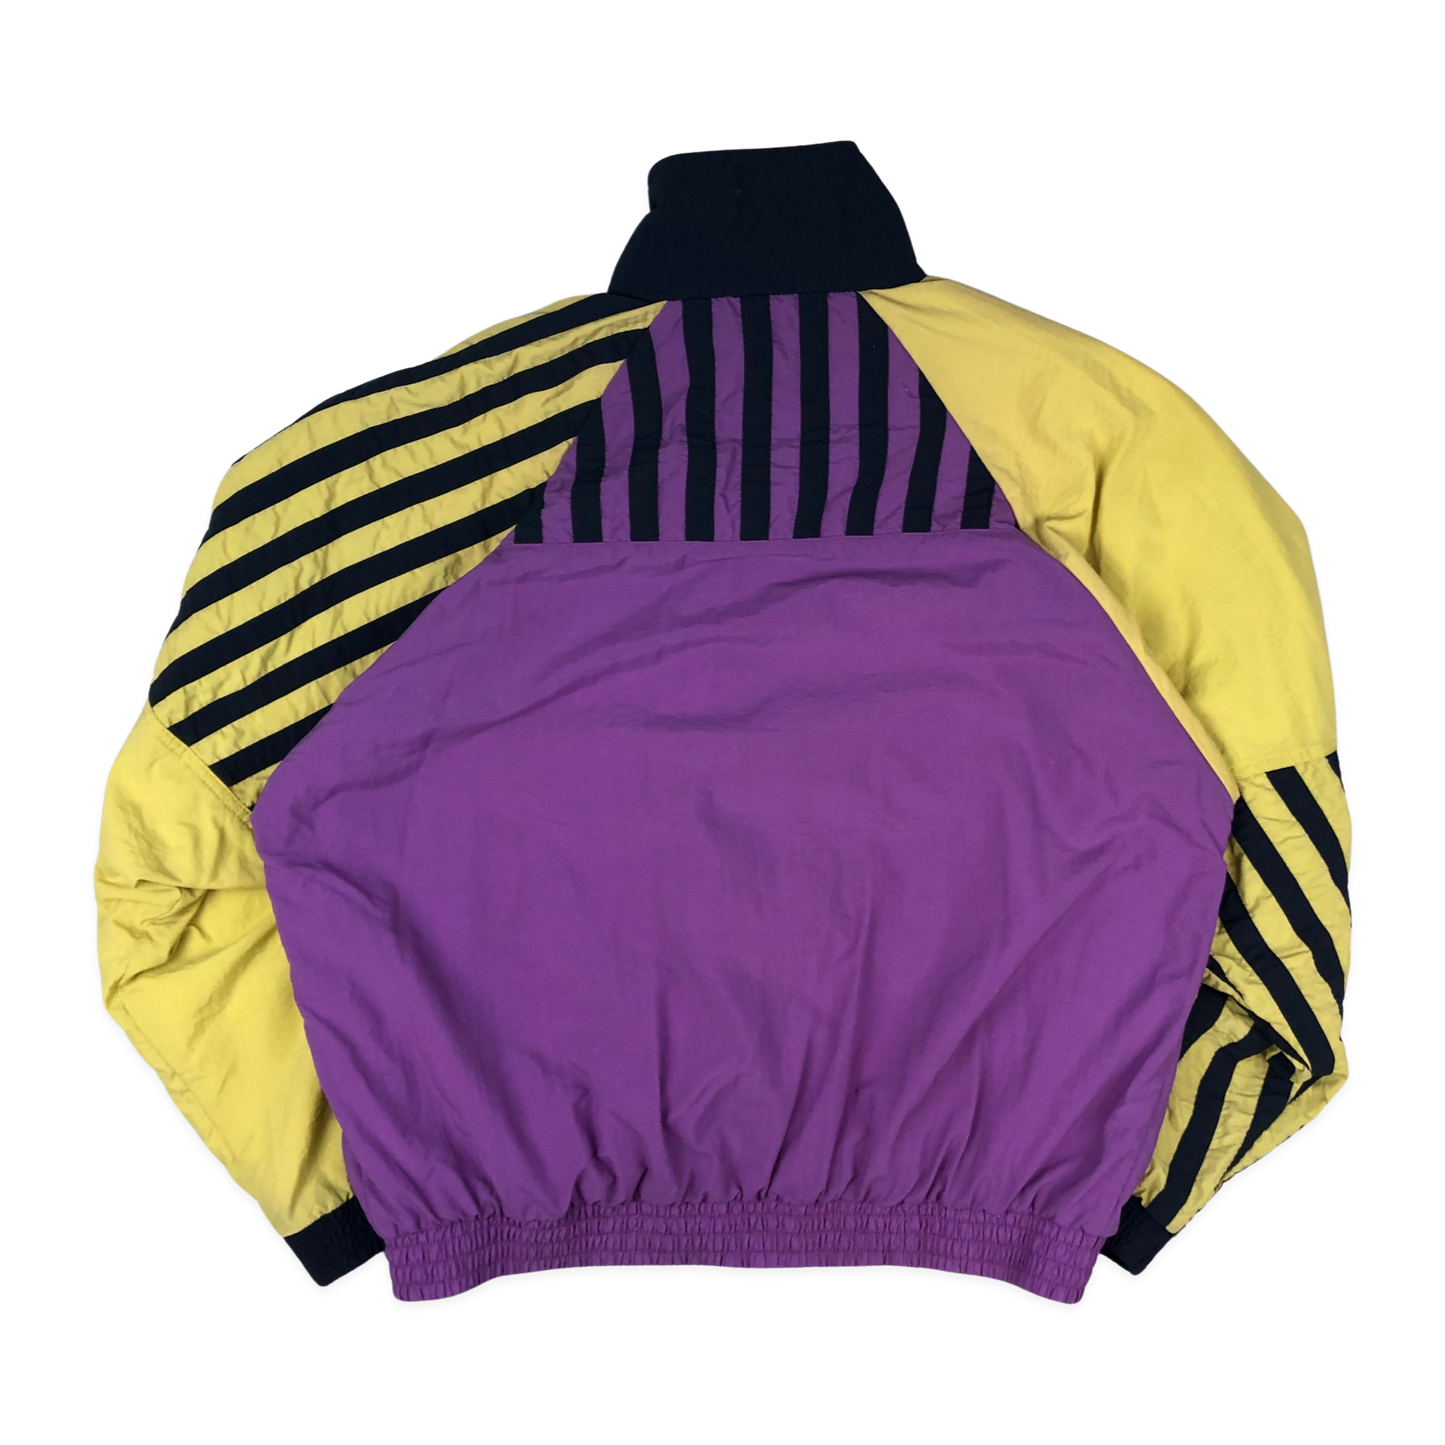 Vintage 90s Puma Yellow, Black, Purple "Summer Team" Shell Coat M